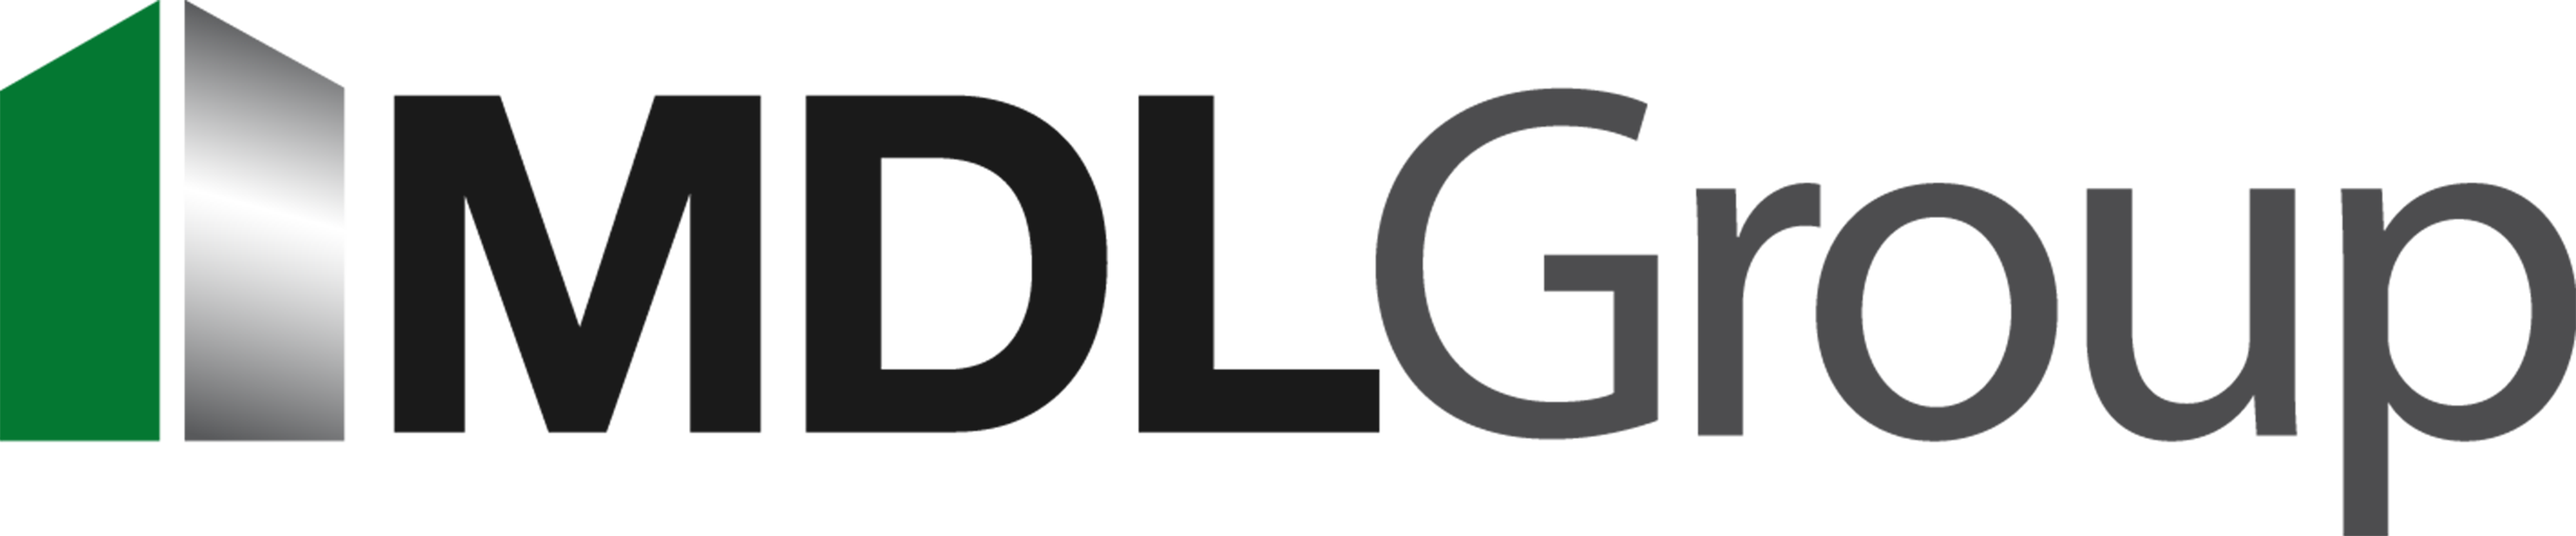 MDL Group logo